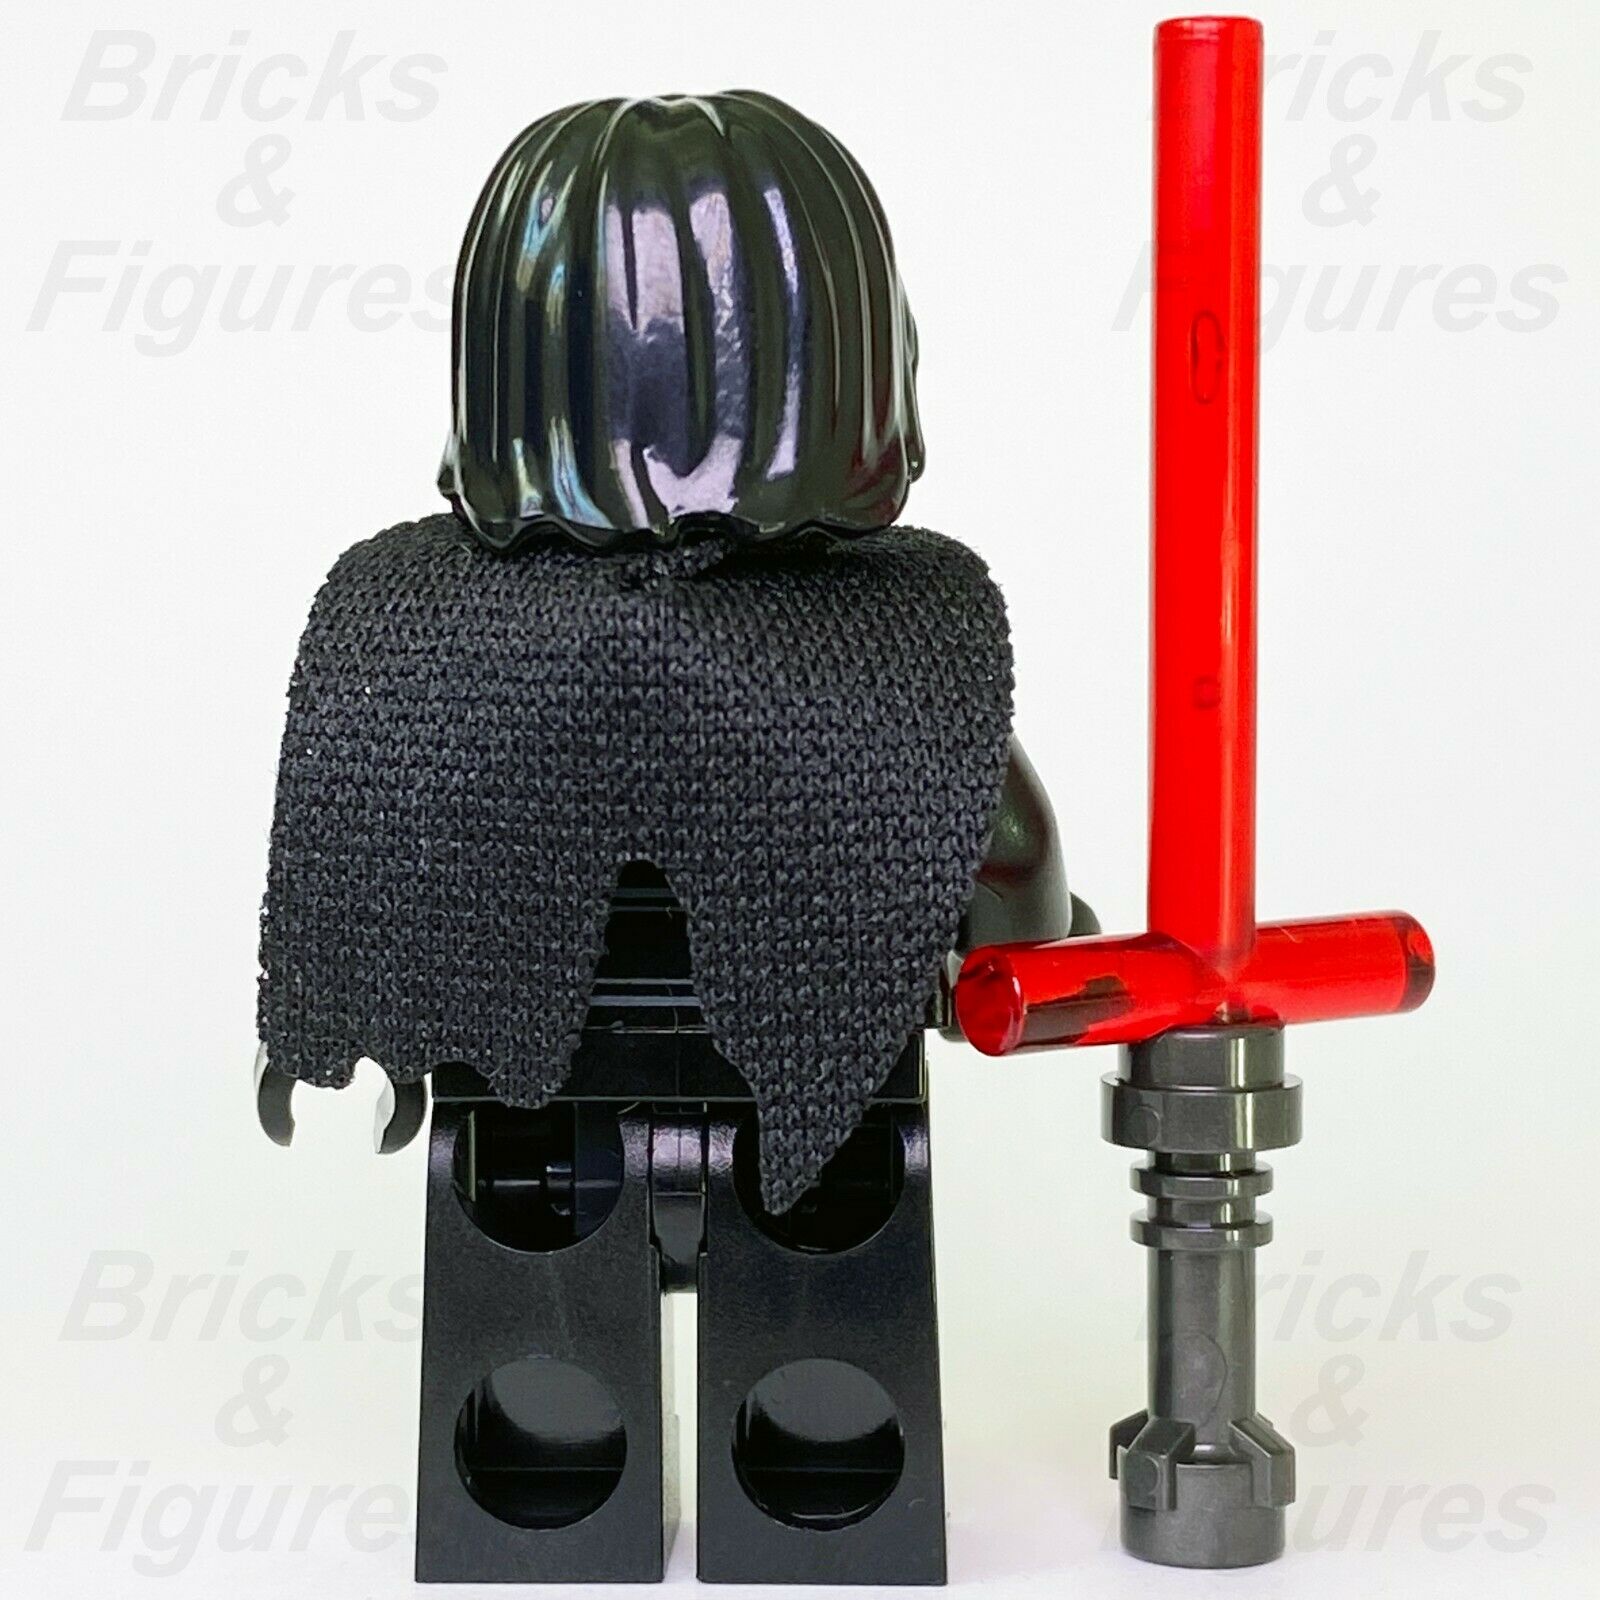 New Star Wars LEGO Kylo Ren First Order Force Awakens Sith Minifigure 75139 - Bricks & Figures